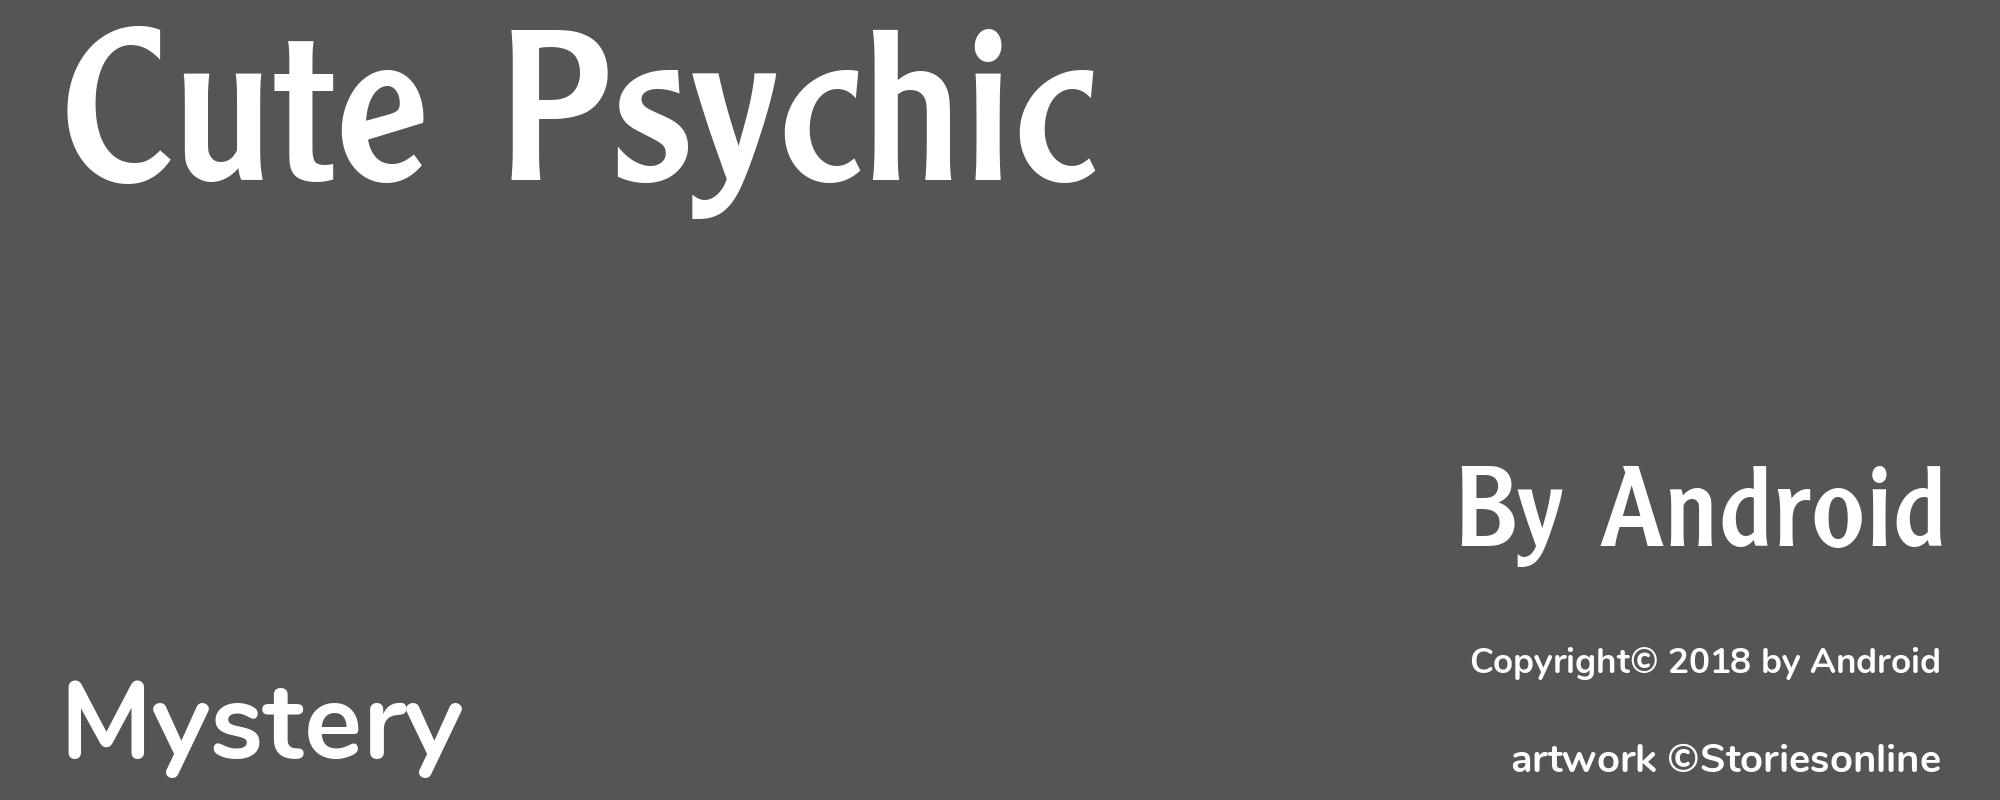 Cute Psychic - Cover